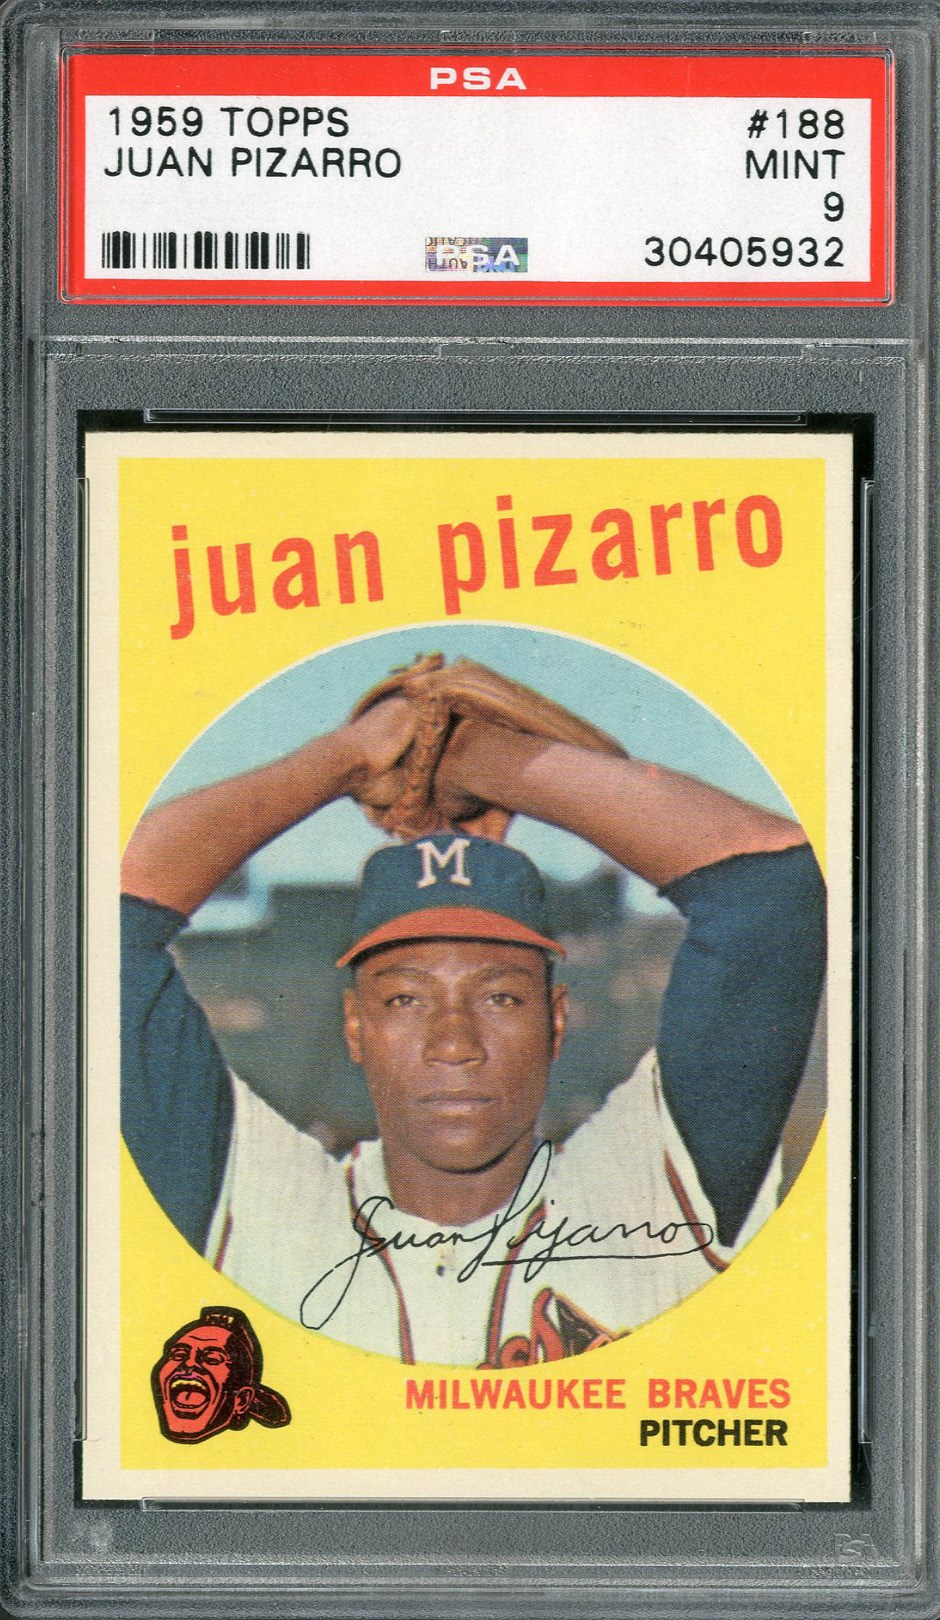 - 1959 Topps #188 Juan Pizarro PSA MINT 9